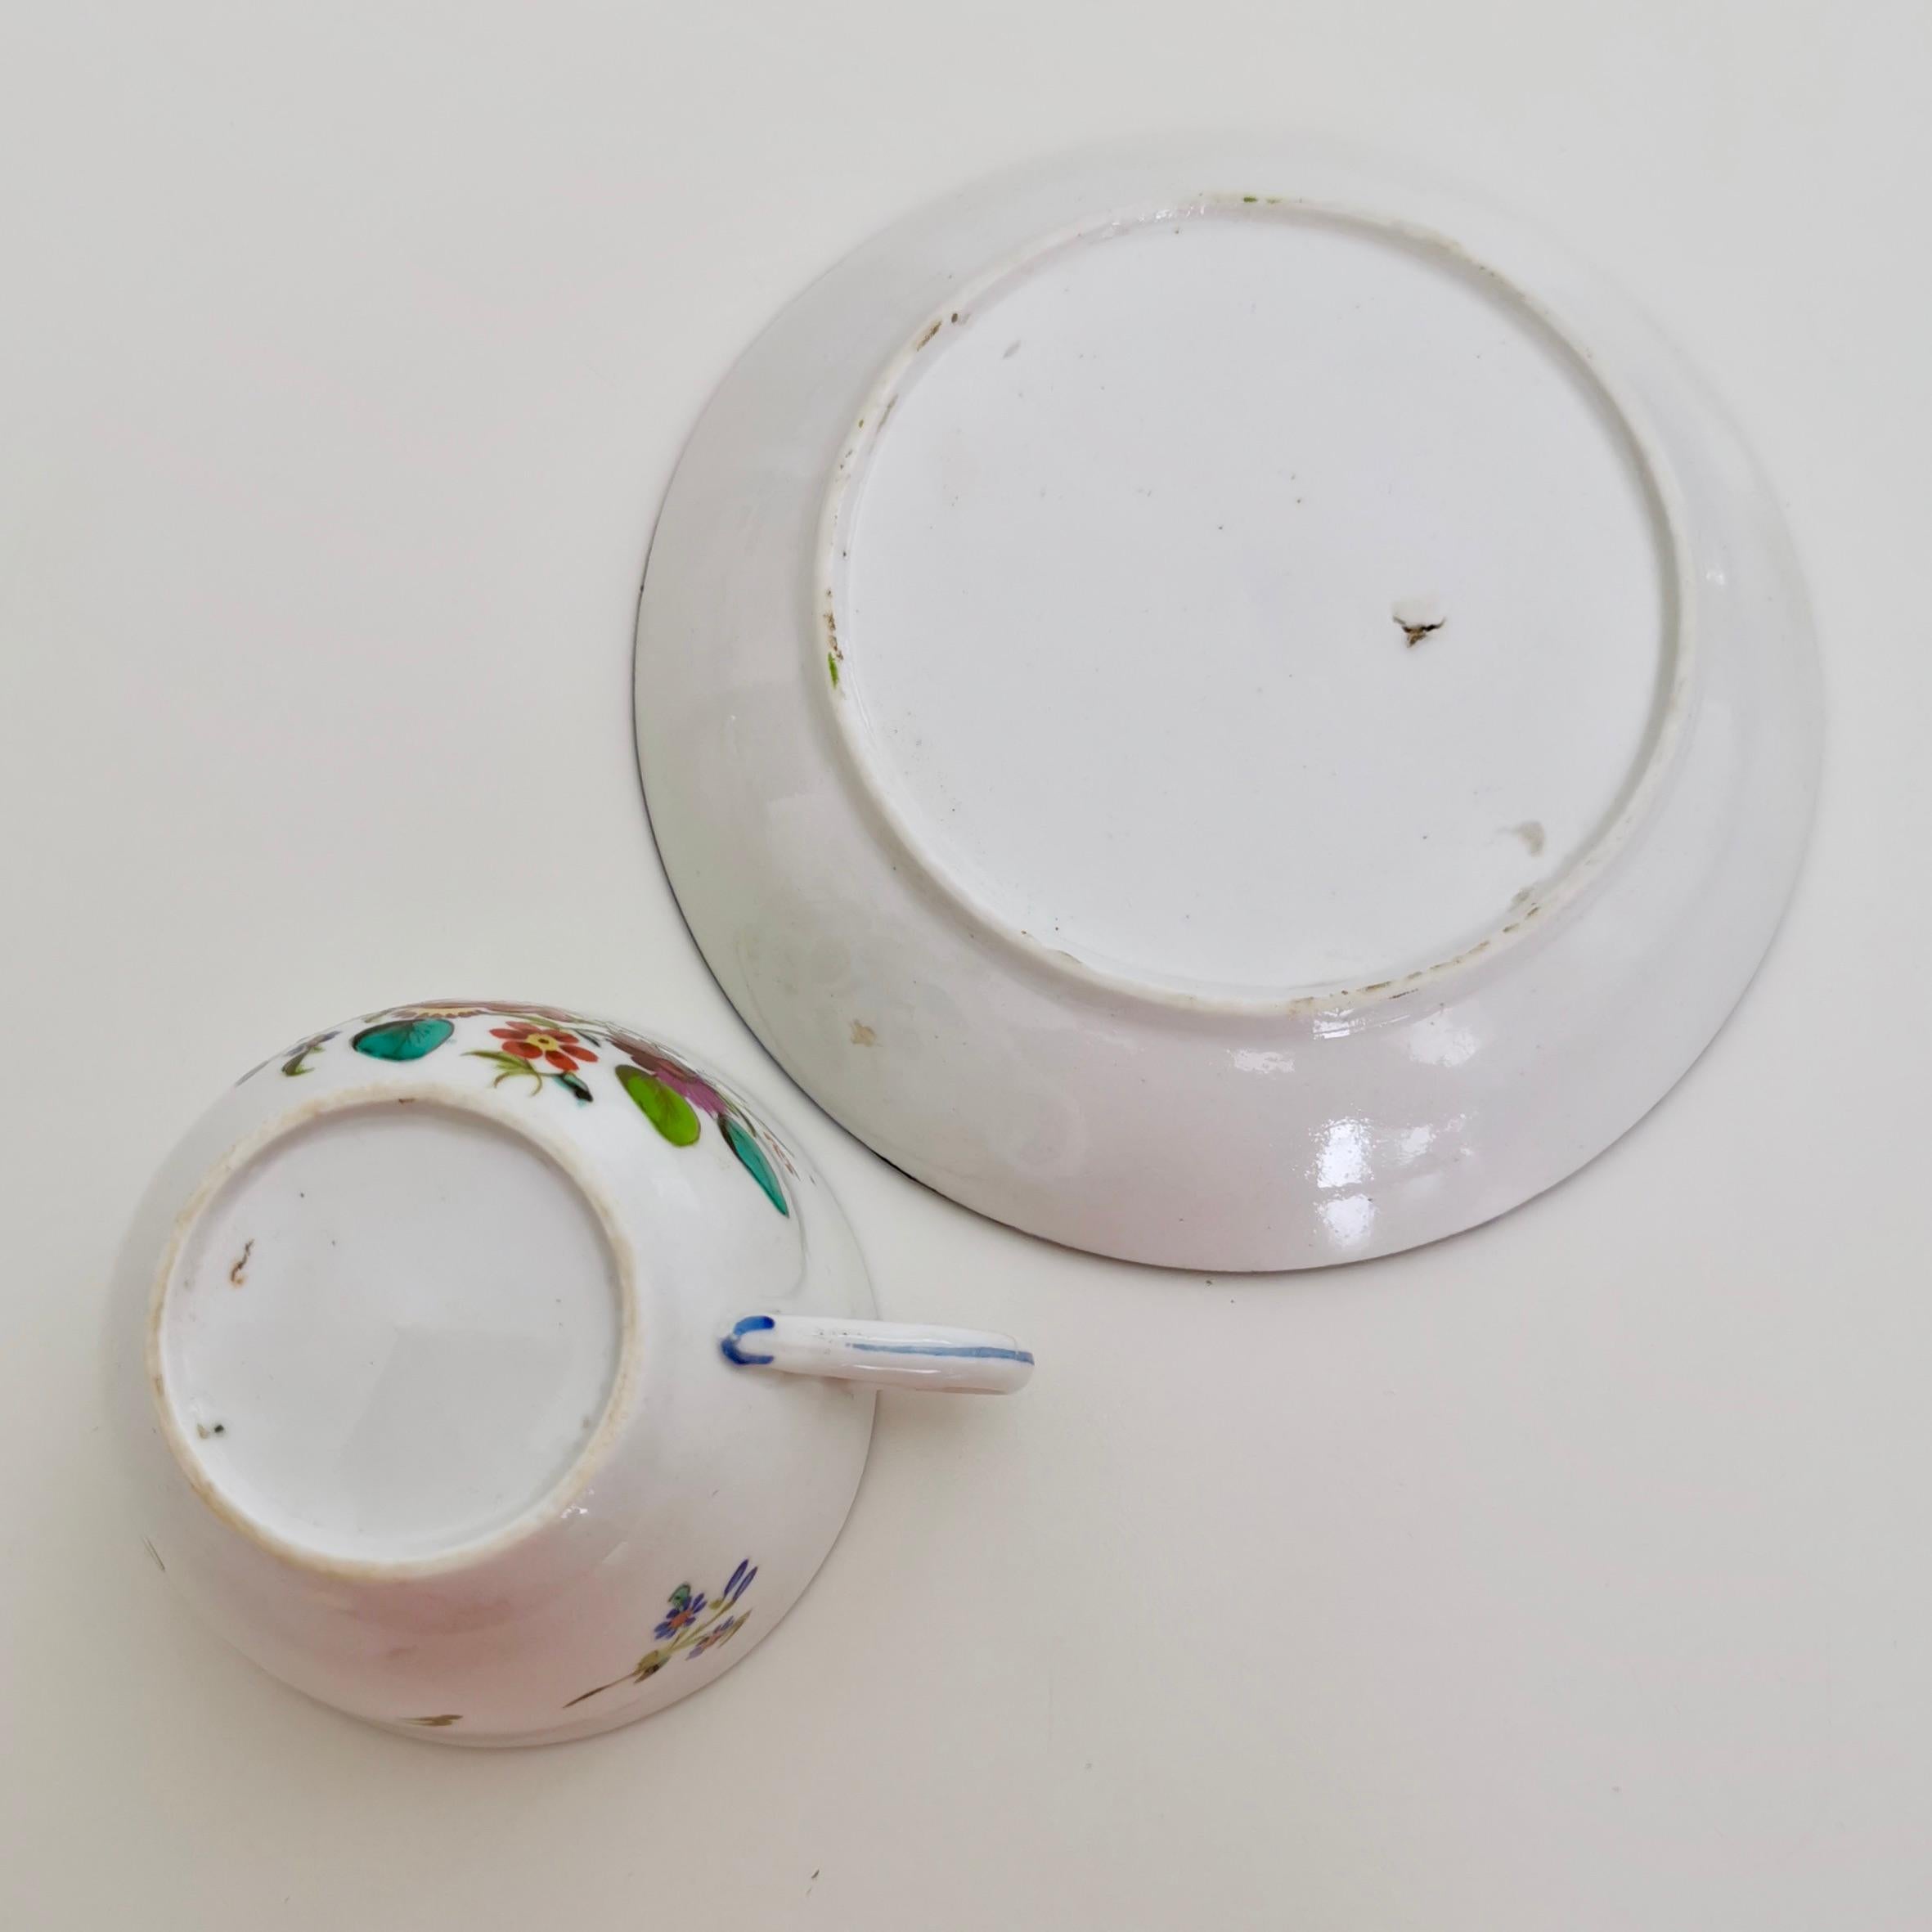 New Hall Porcelain Teacup, Hybrid Paste, Flowers Patt, 1180, circa 1815 7